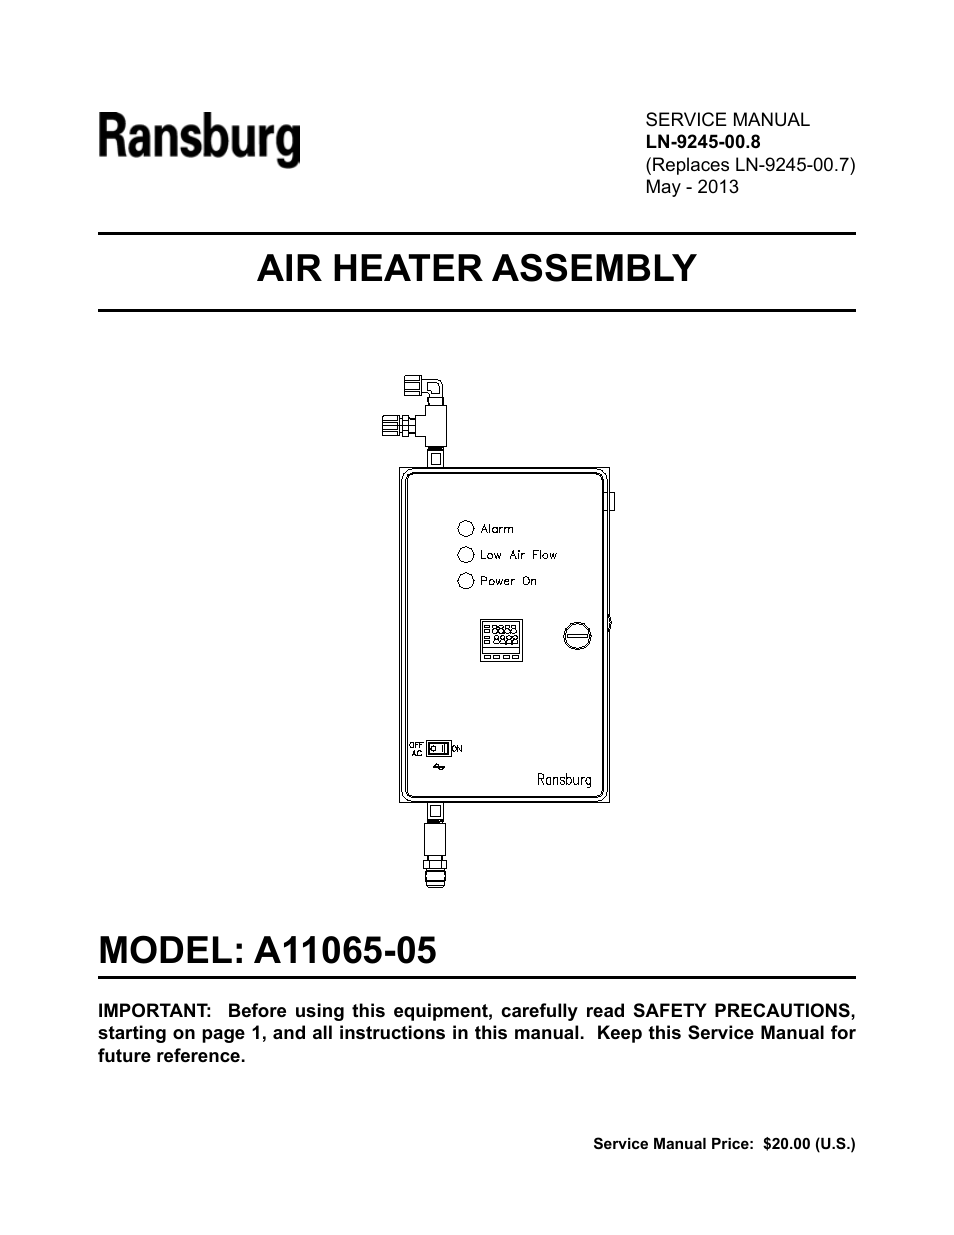 Air Heater Assy. A11065-05